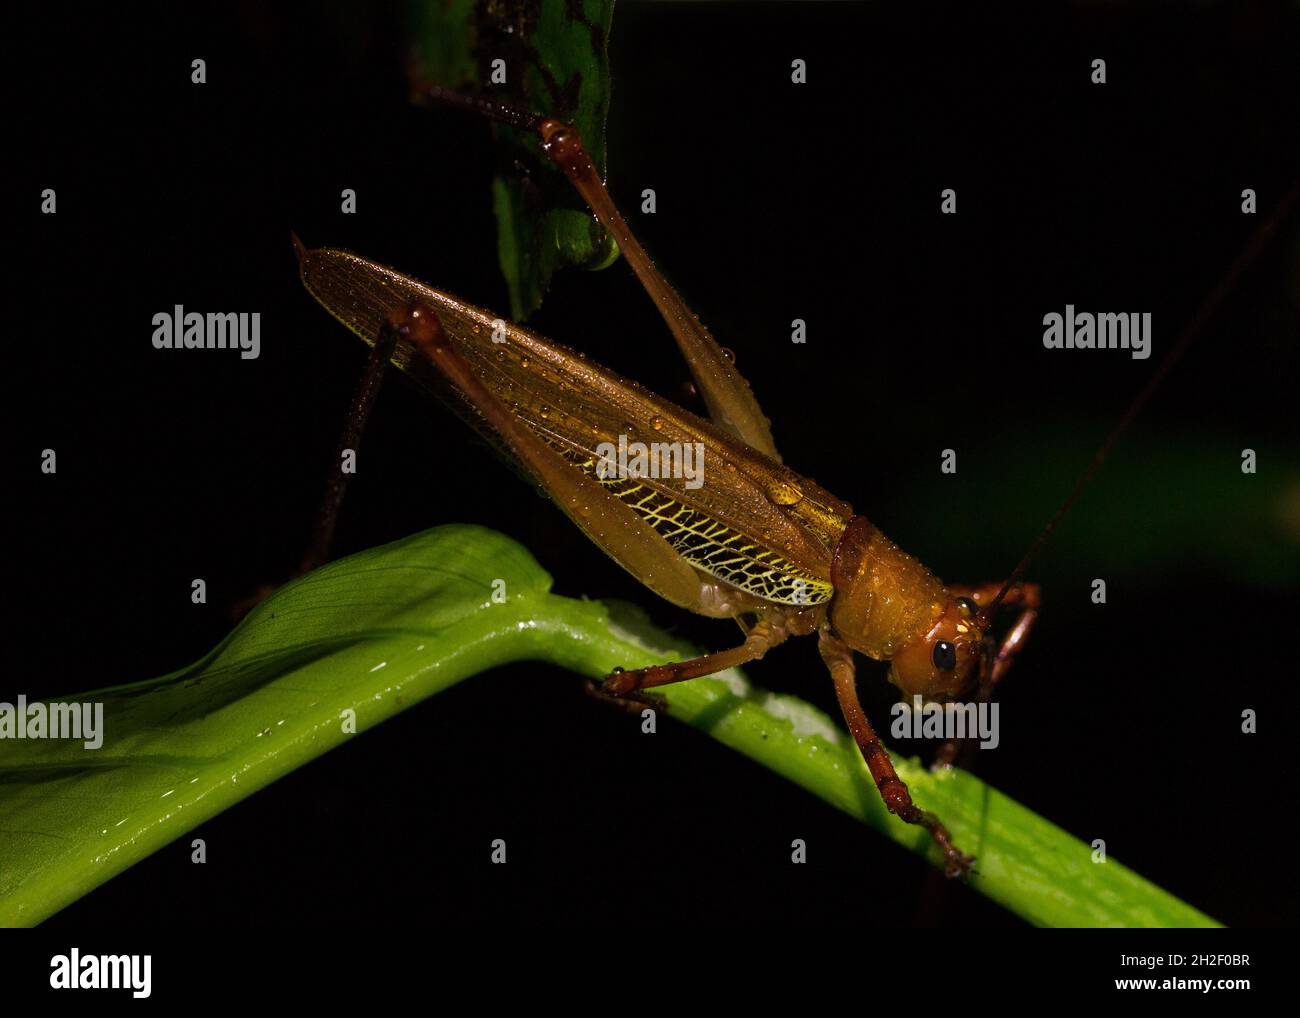 A large brown grasshopper at night in Puerto Viego de Sarapiqui, Costa Rica Stock Photo